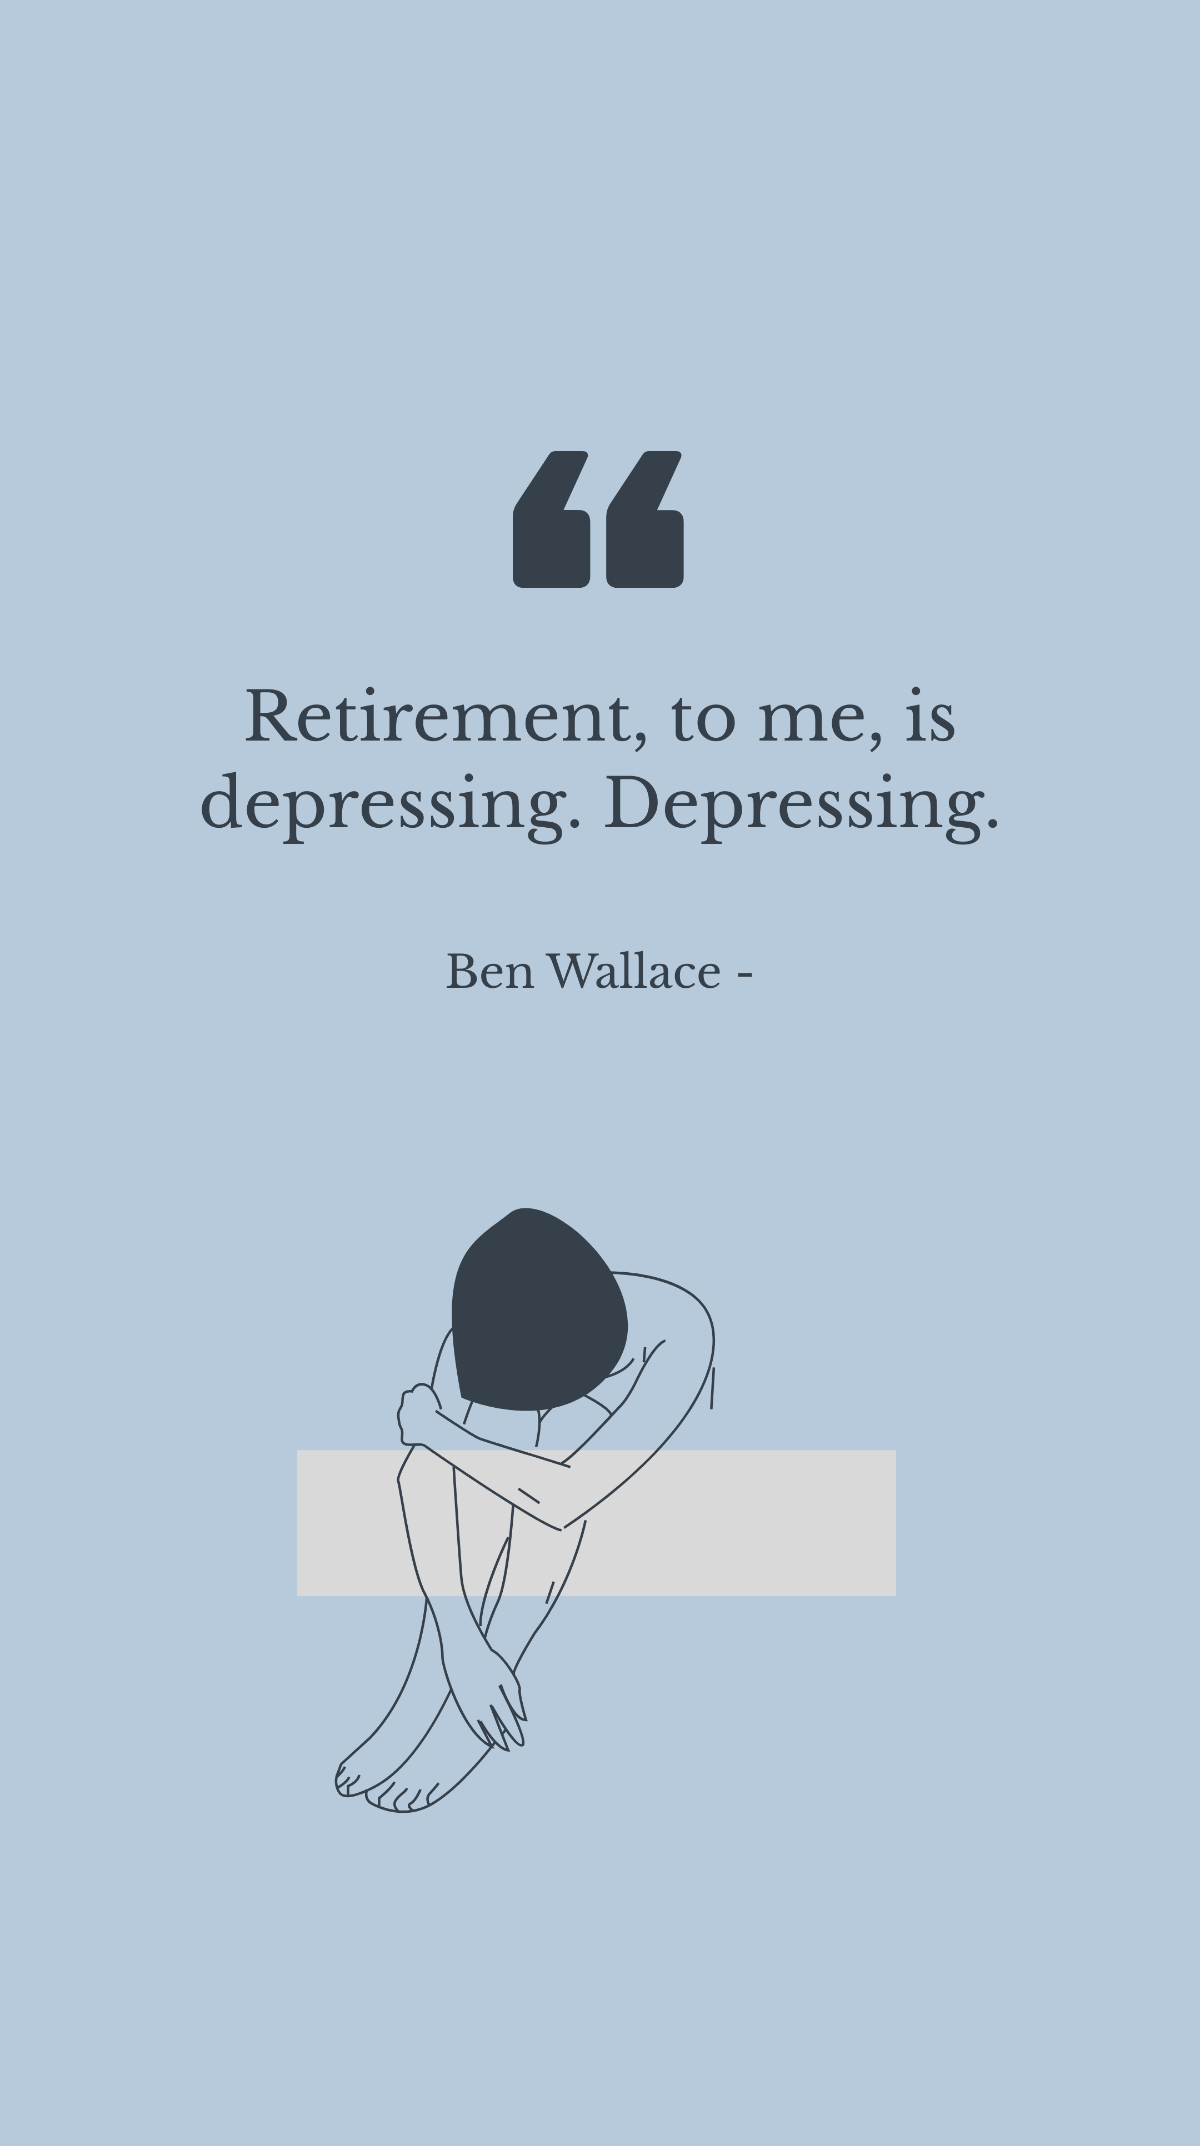 Ben Wallace - Retirement, to me, is depressing. Depressing.